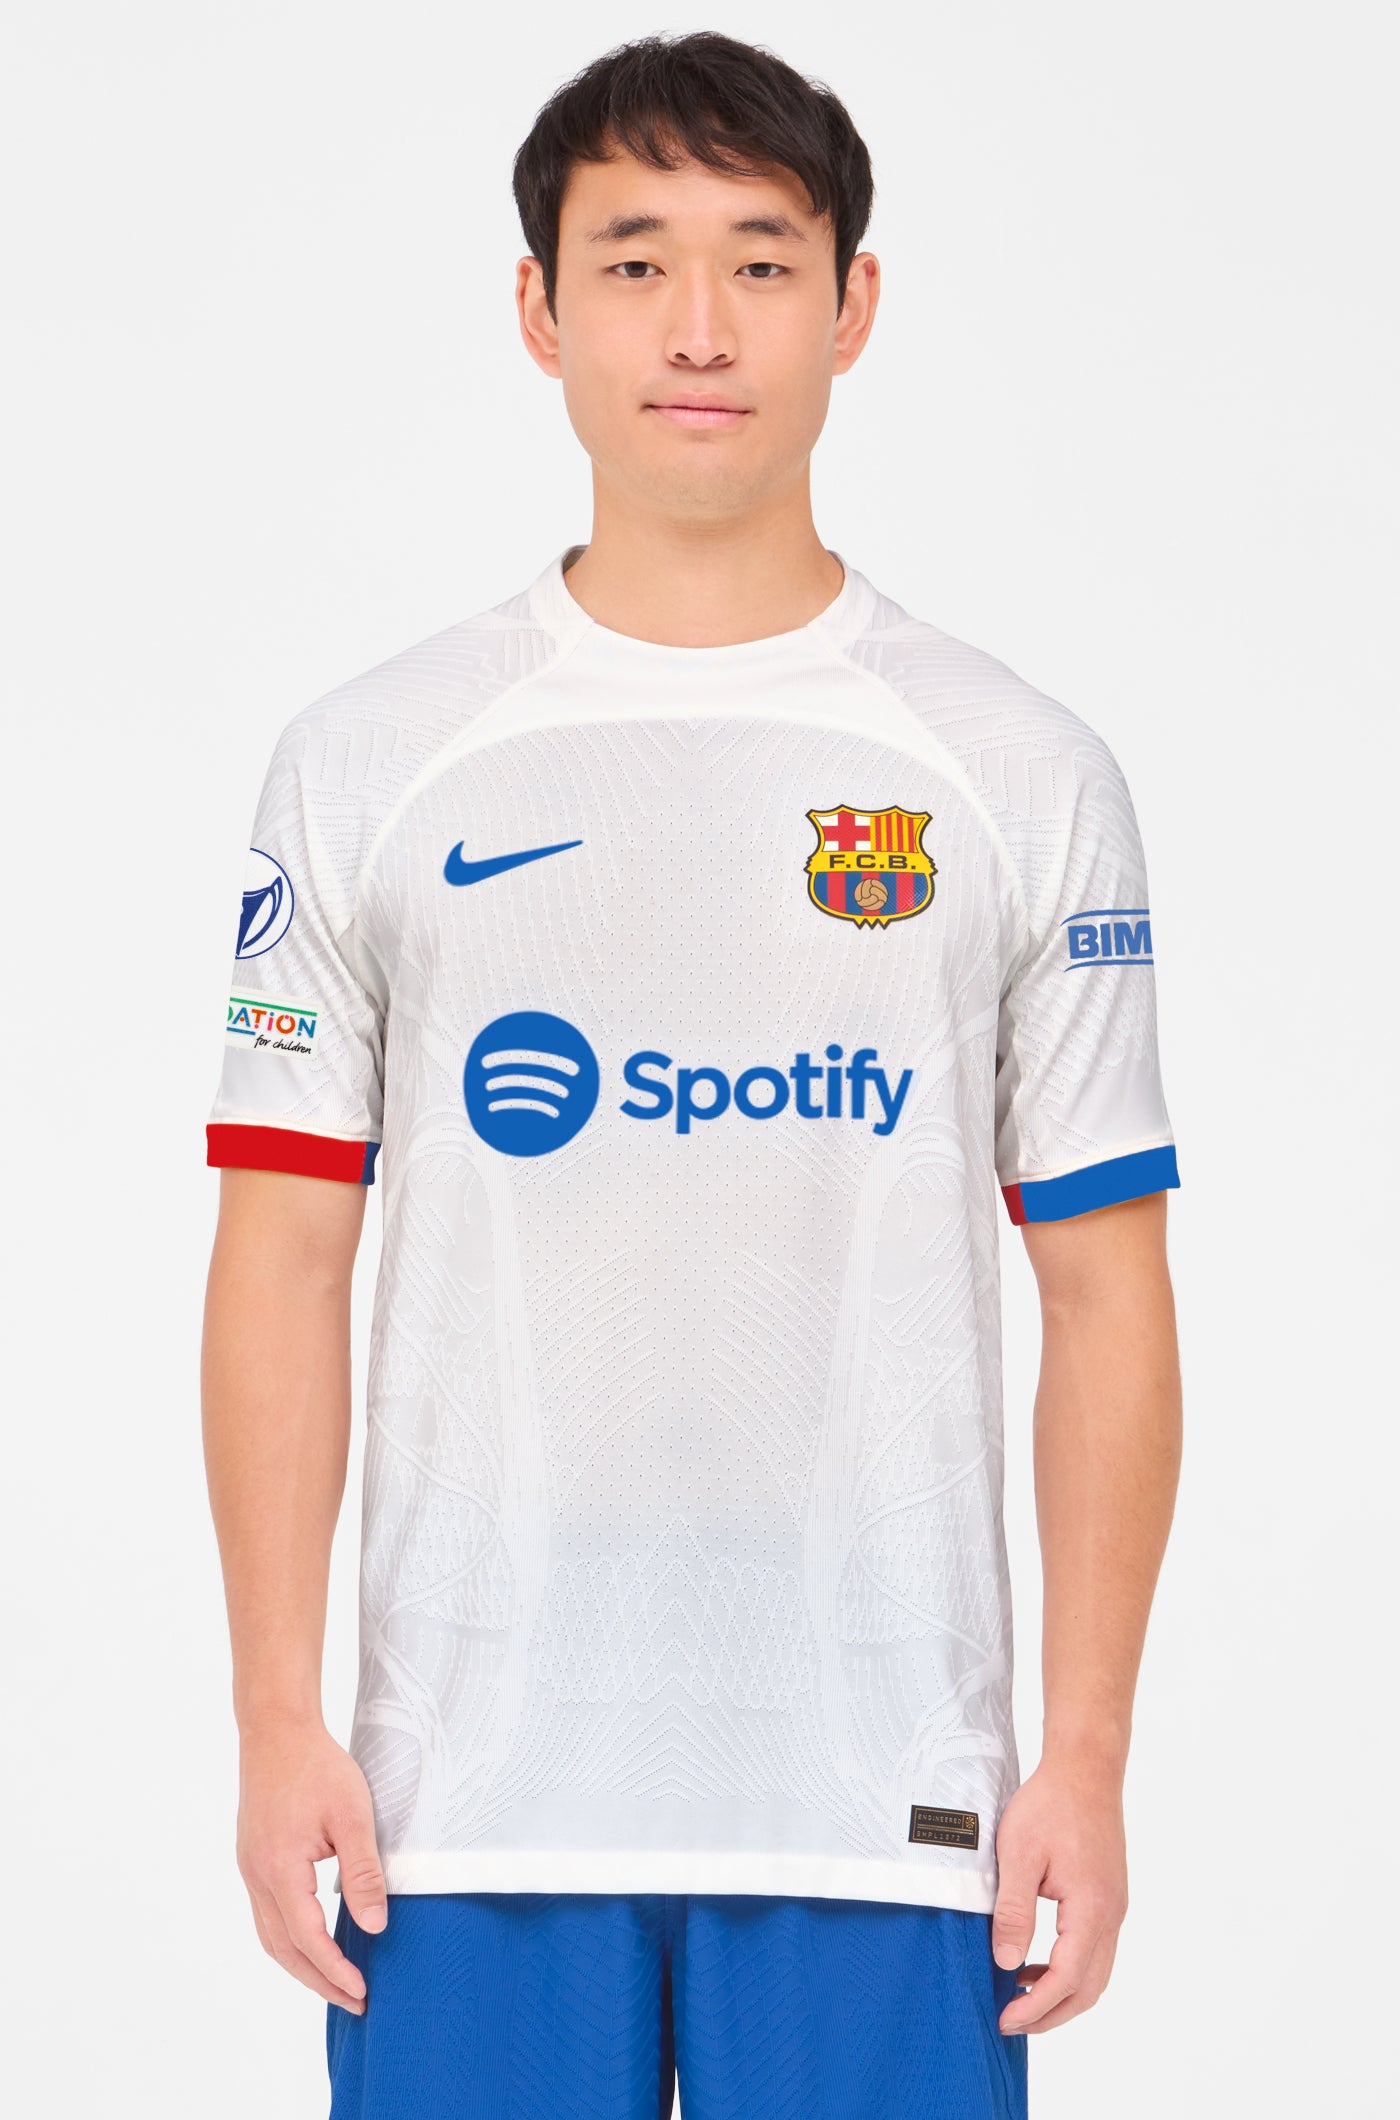 UWCL FC Barcelona away shirt 23/24 Player's Edition - GRAHAM